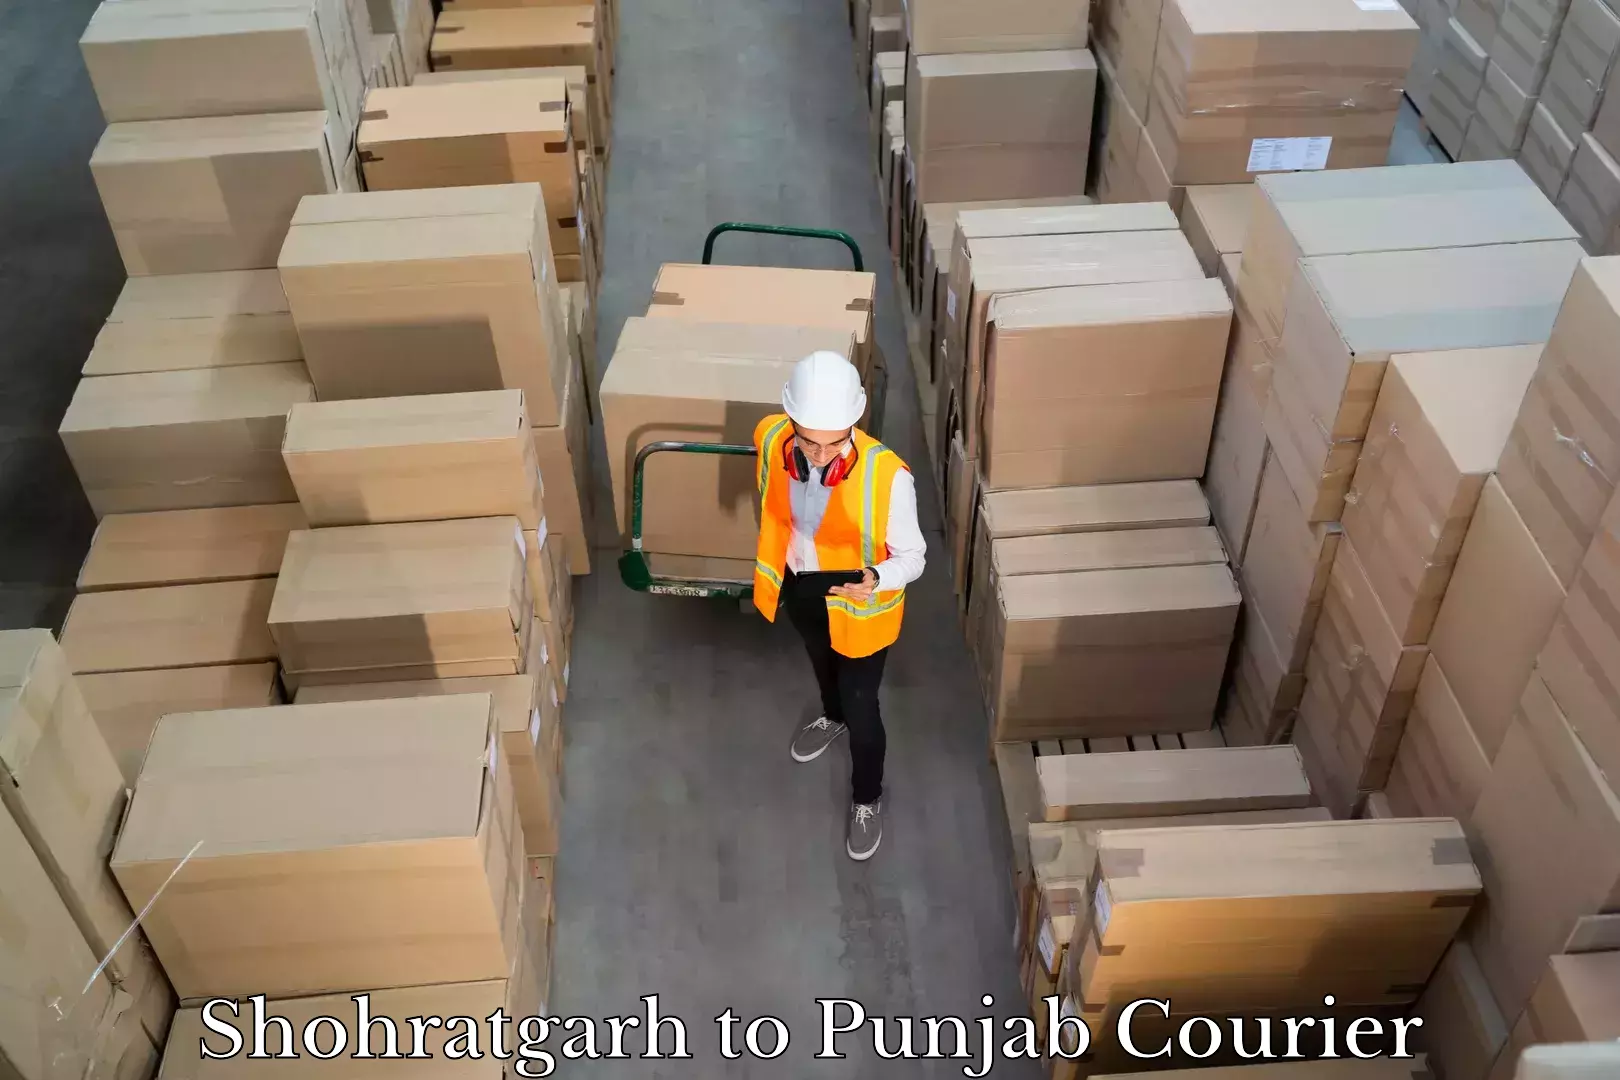 Luggage shipment specialists Shohratgarh to Amritsar